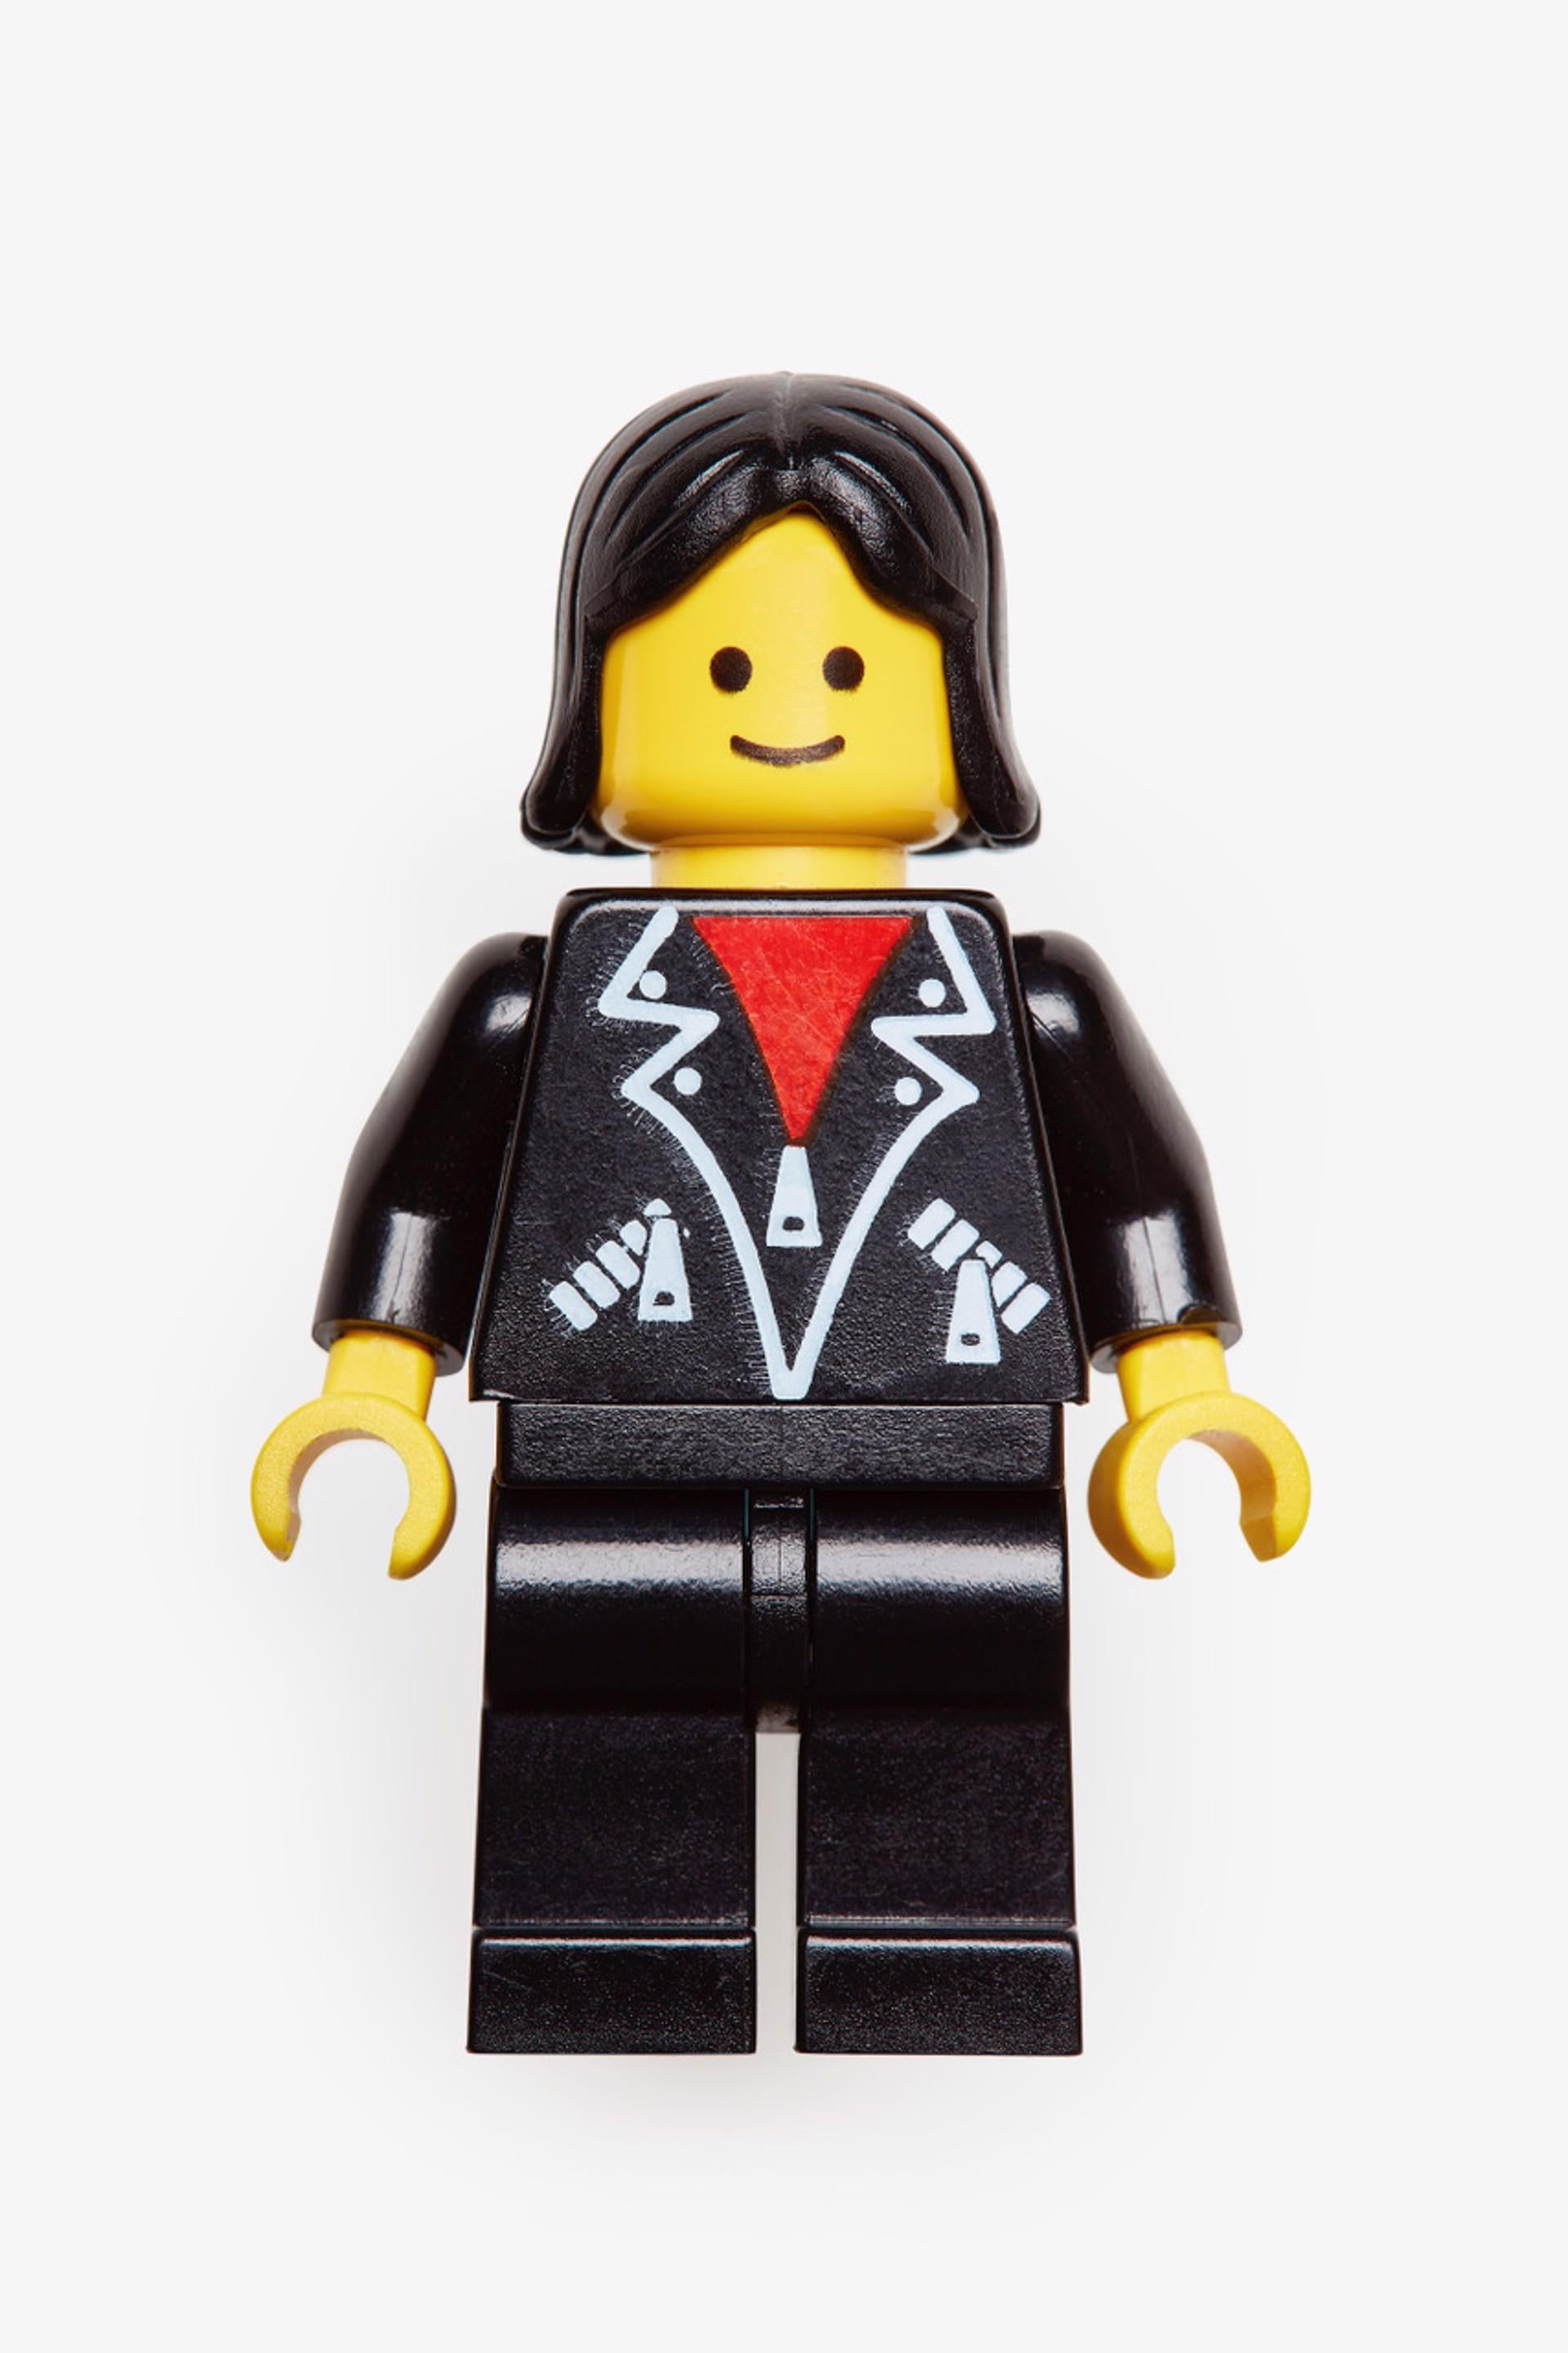 Peter Andrew Lusztyk Figurative Photograph - Lego "Ramones" (36" x 24")